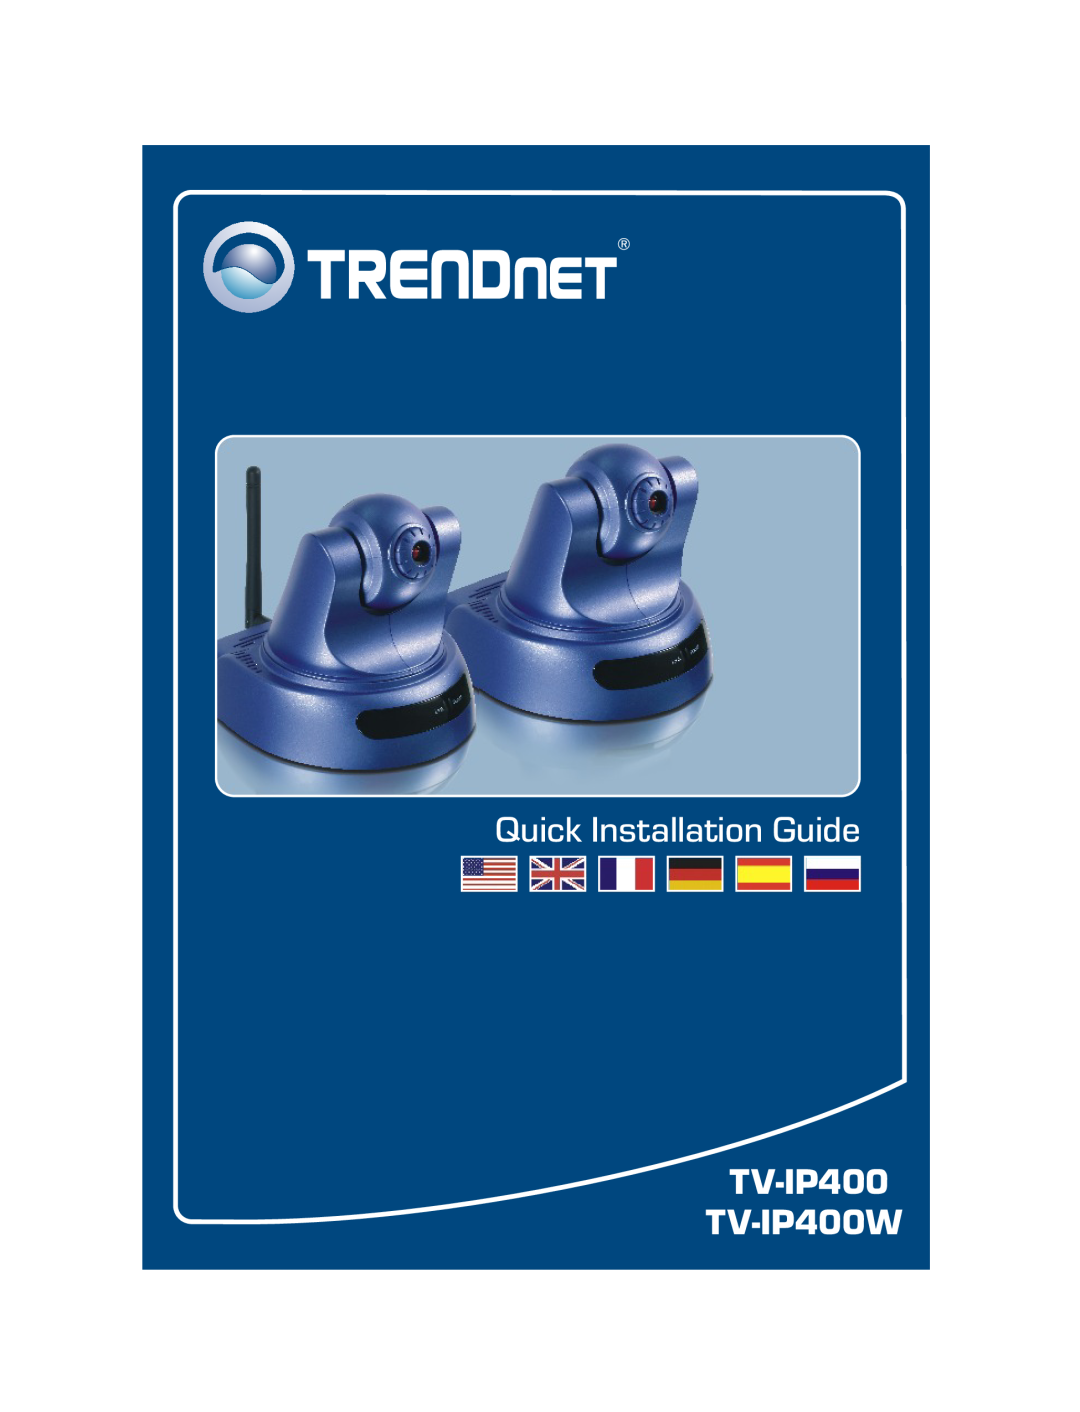 TRENDnet TV-IP410WN, TRENDNET manual 1.01, Quick Installation Guide 